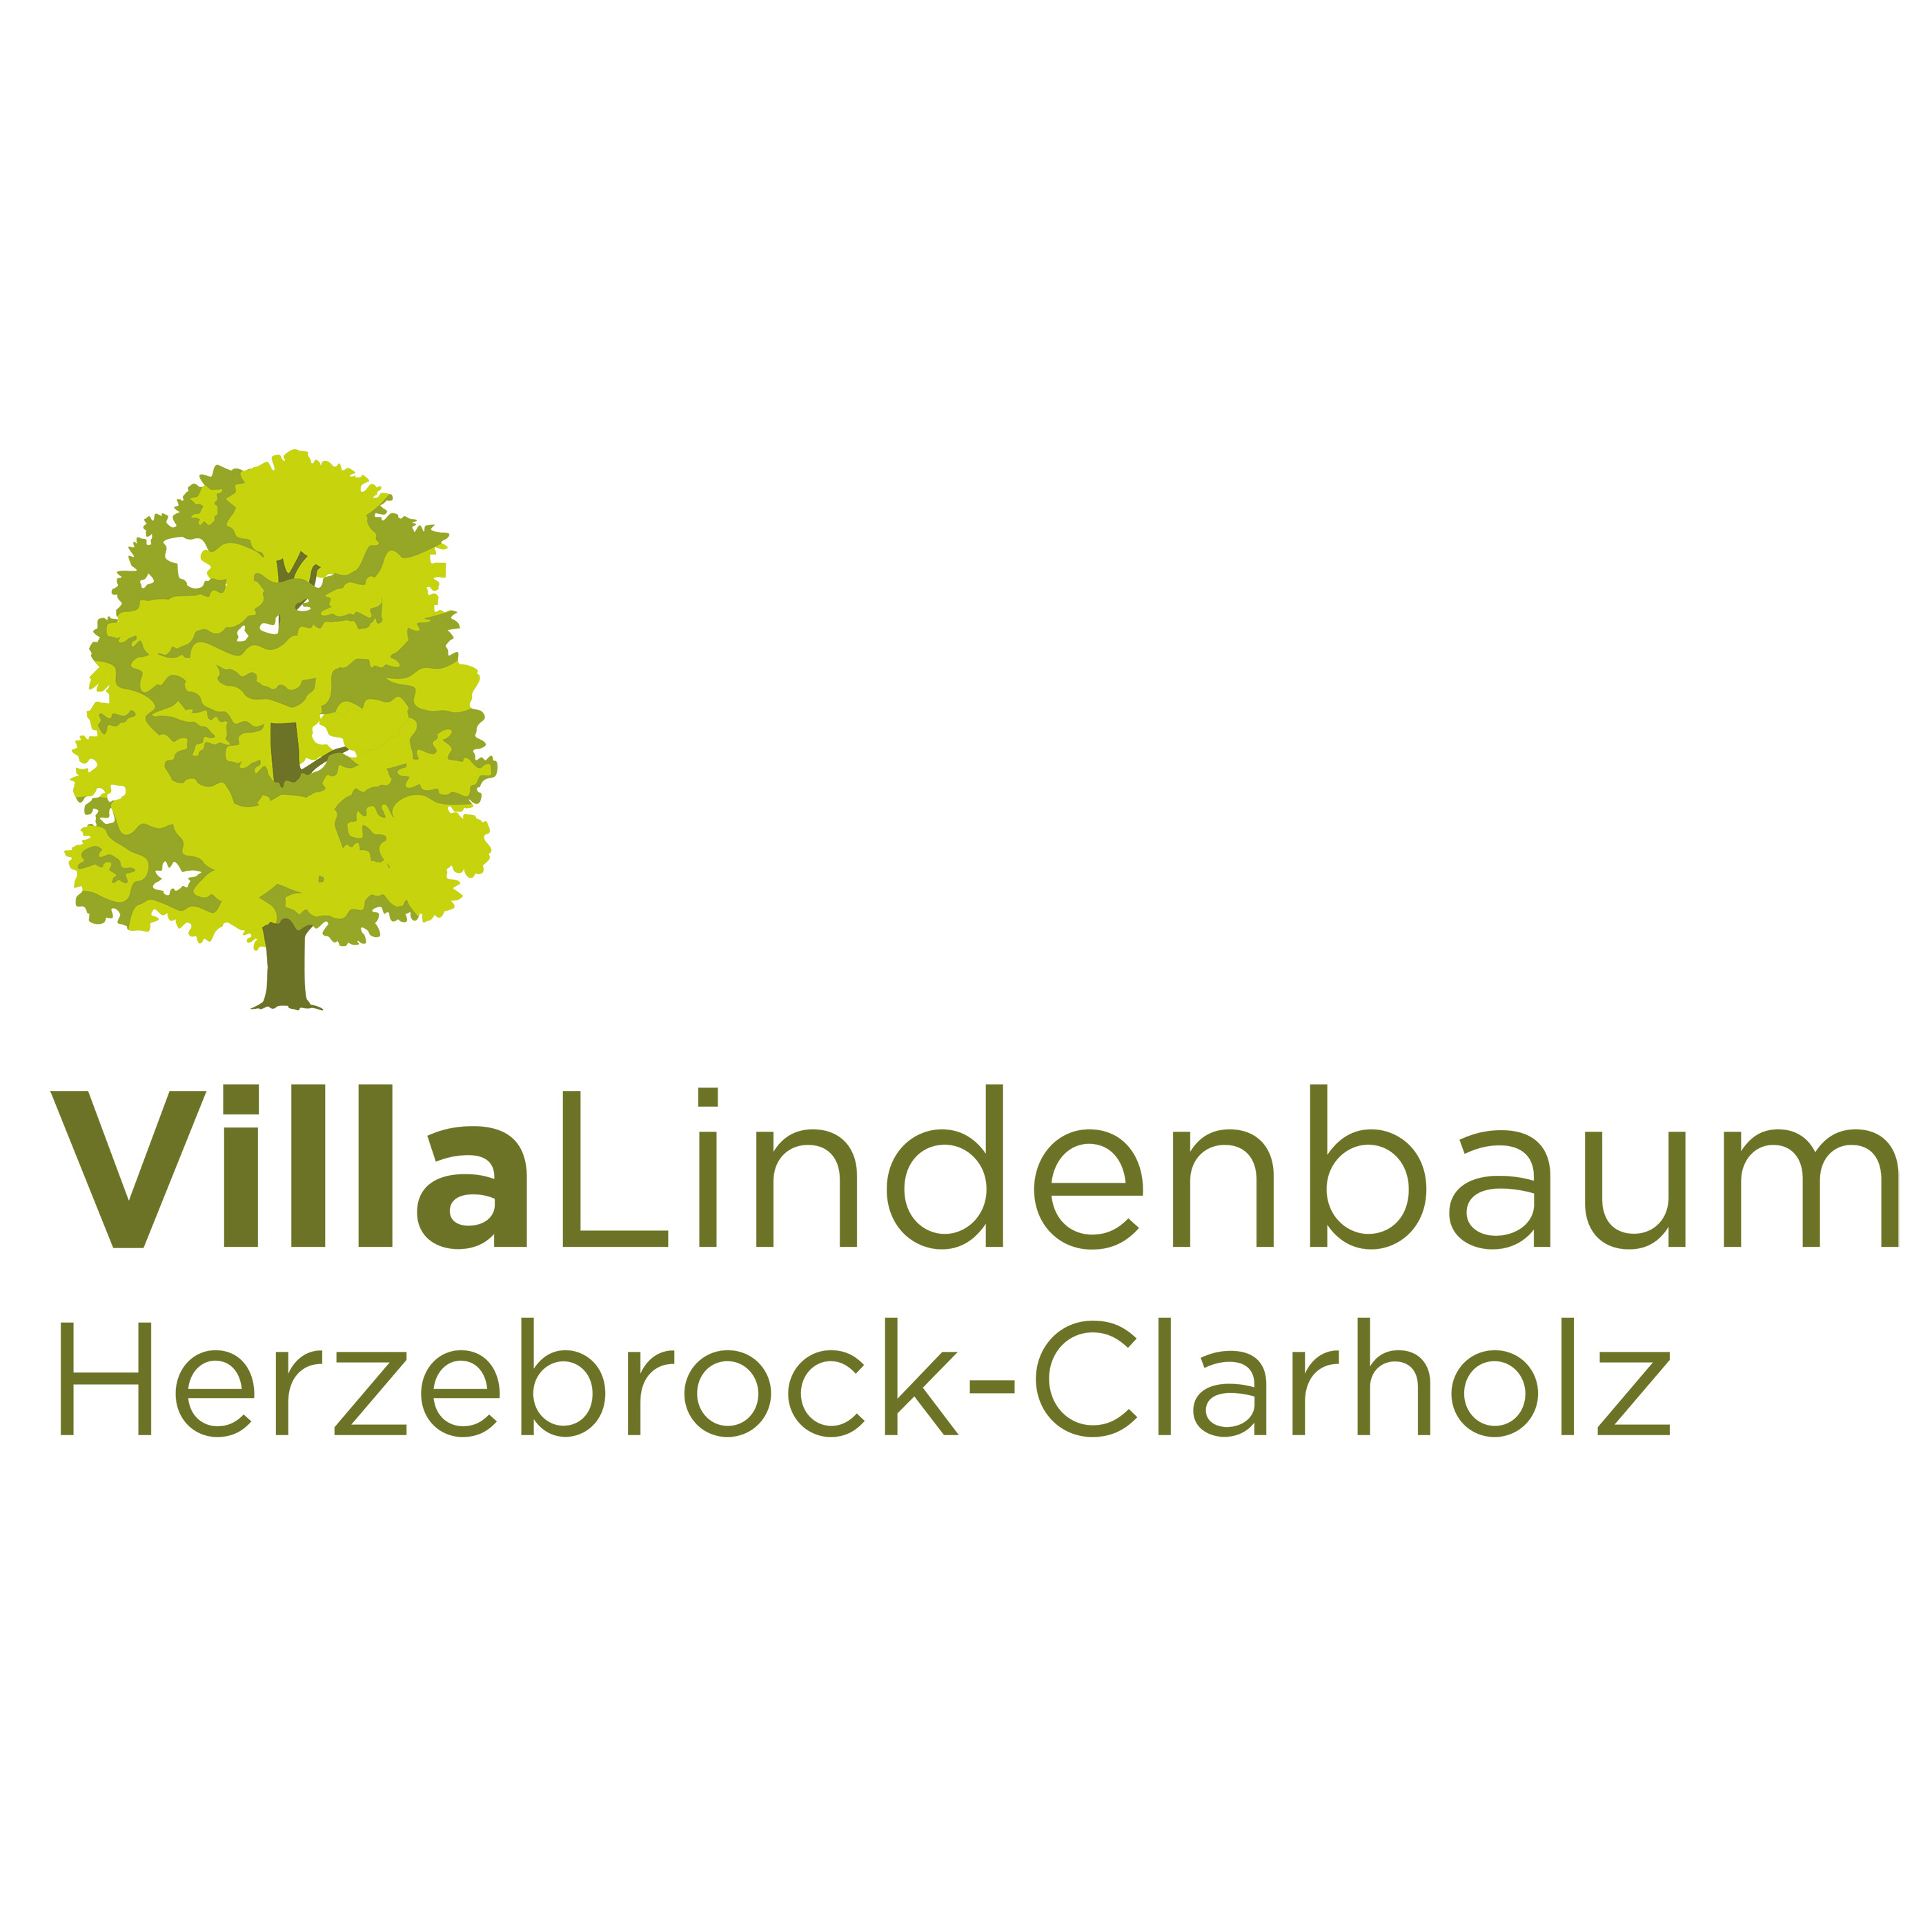 Logo Villa Lindenbaum
Herzebrock-Clarholz
pme Familienservice